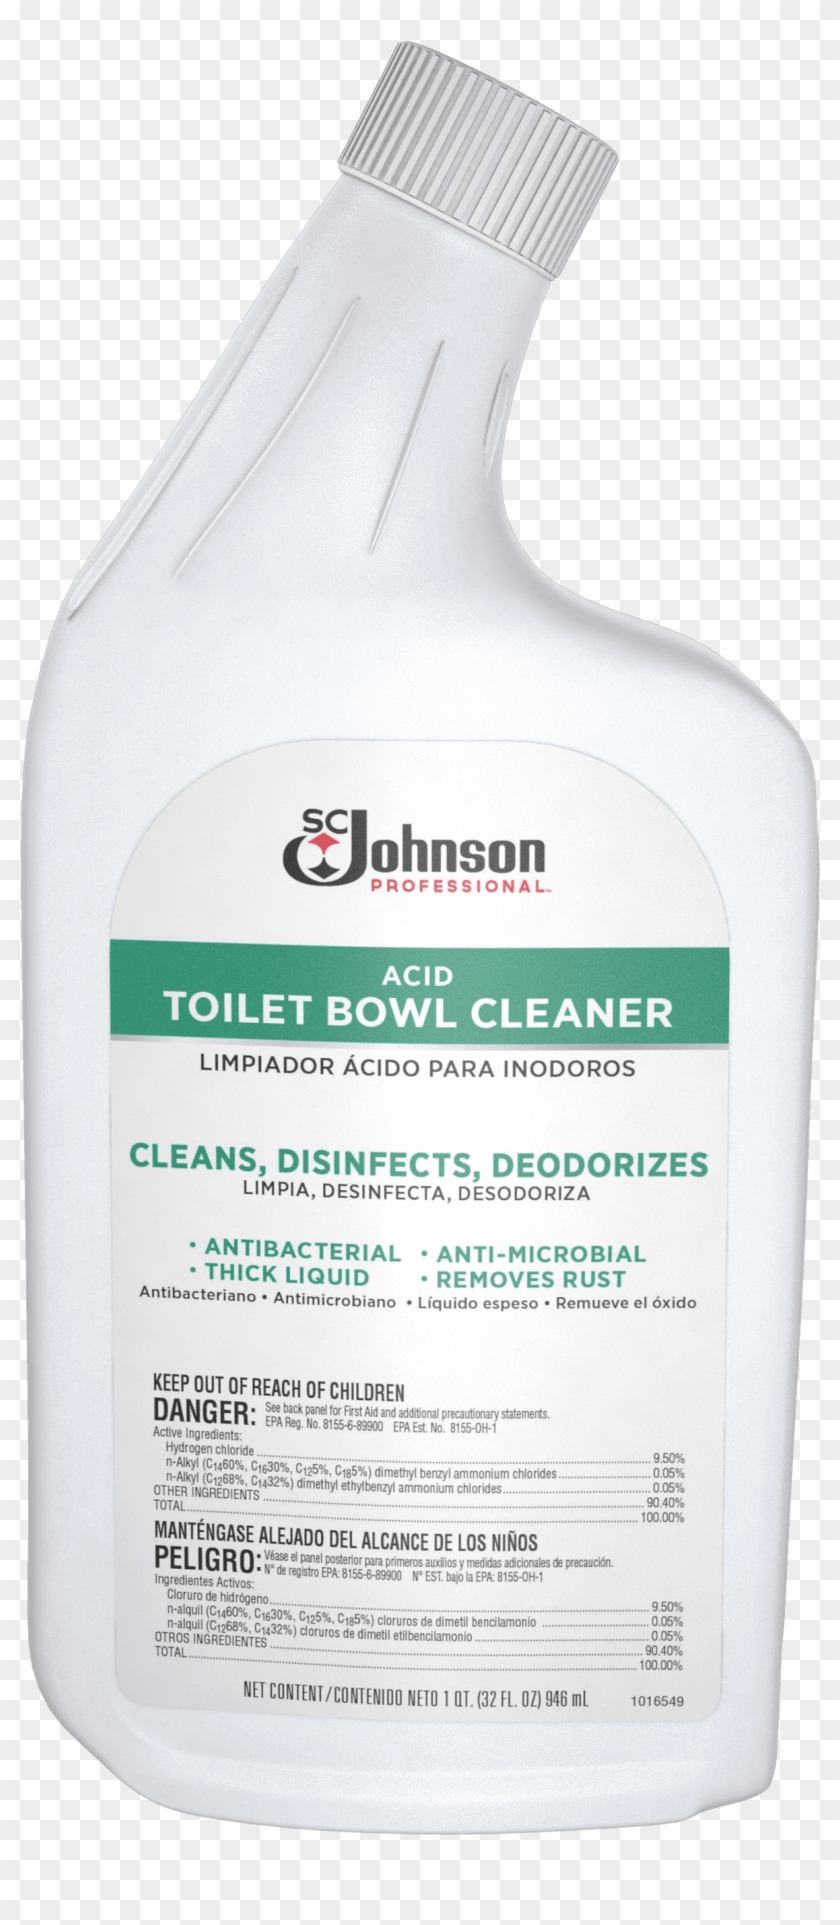 Sc Johnson Professional Toilet Bowl Cleaners - Bottle Clipart #4111483